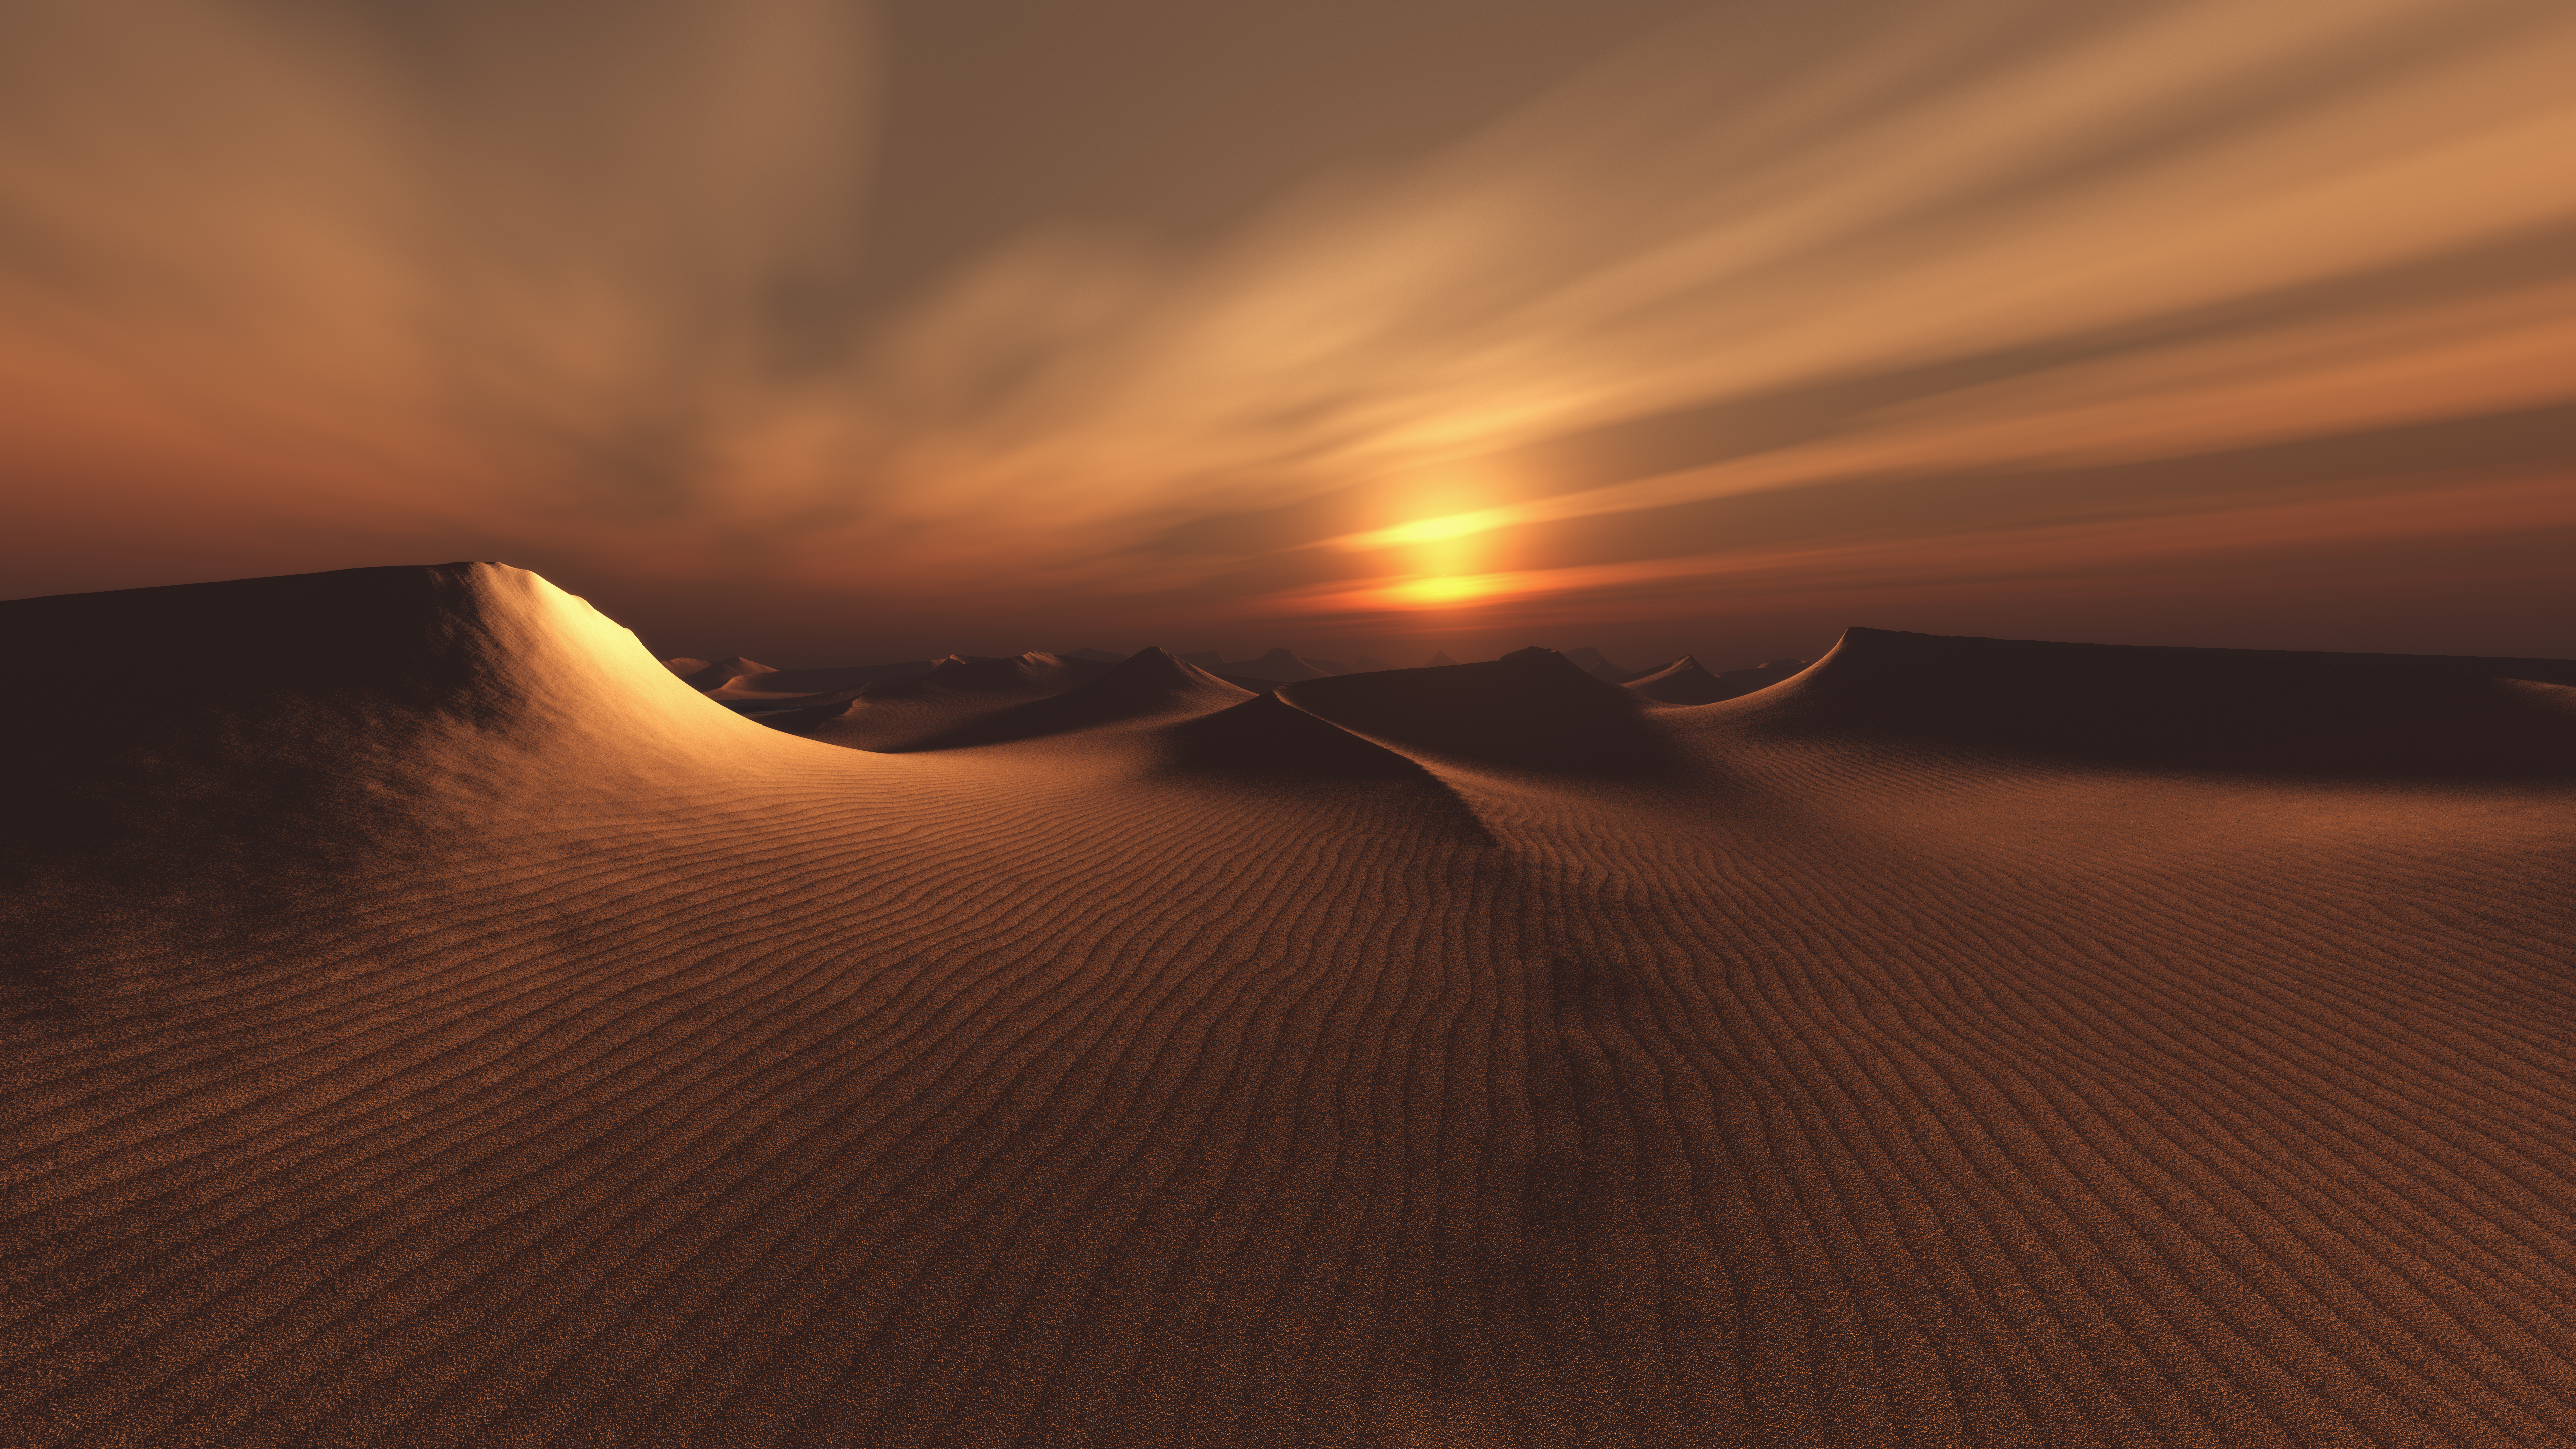 General 5120x2880 desert landscape dunes sand sunset sky clouds nature sunlight sunset glow low light